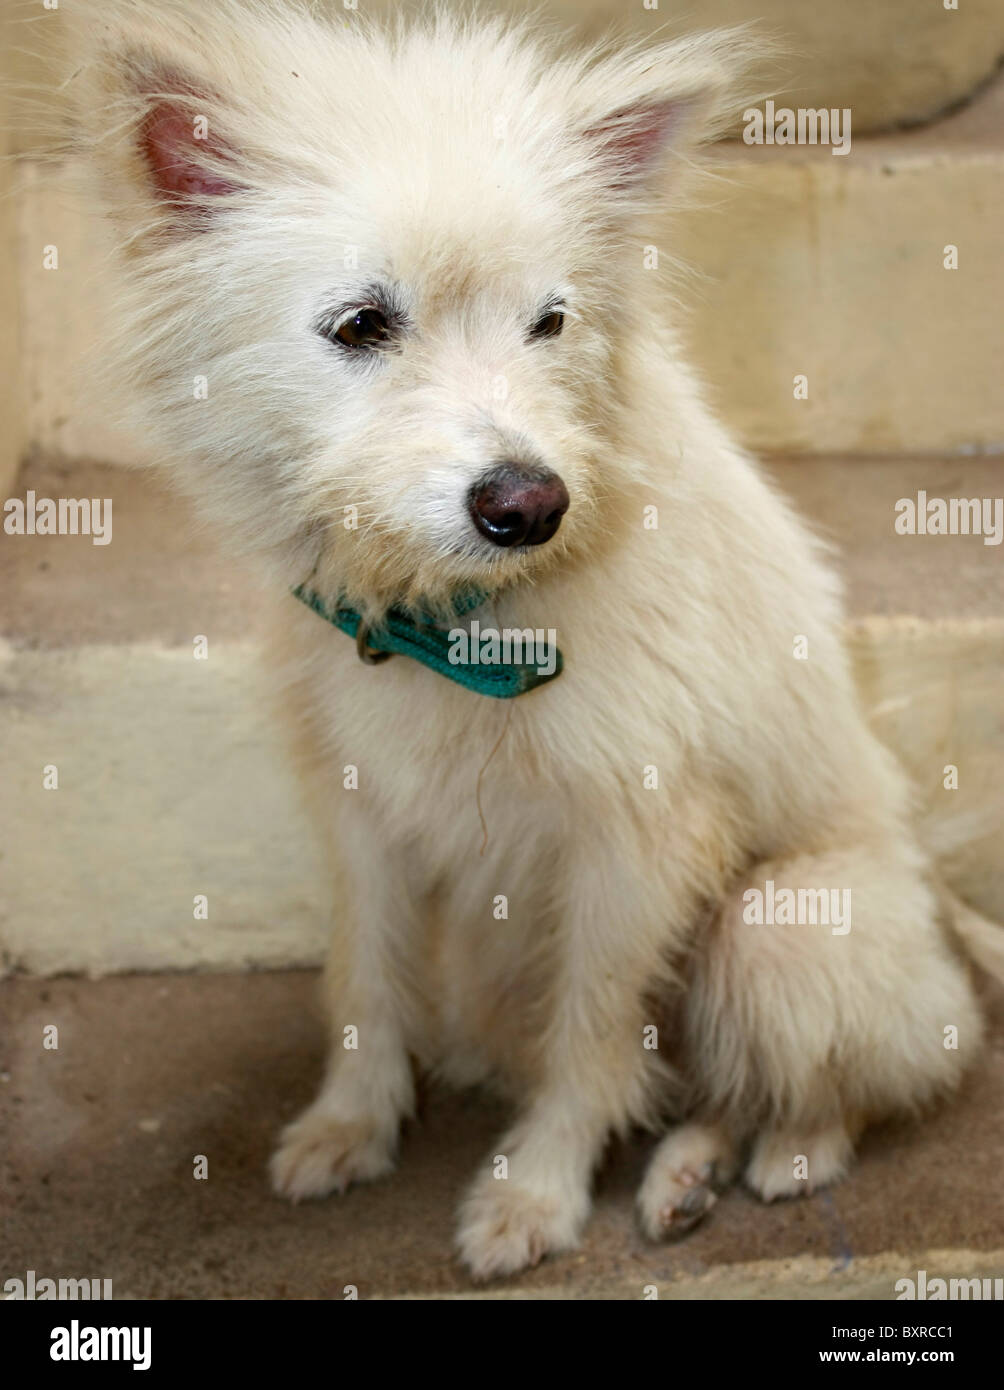 A white Pomeranian dog sitting with a belt on its neck Stock Photo